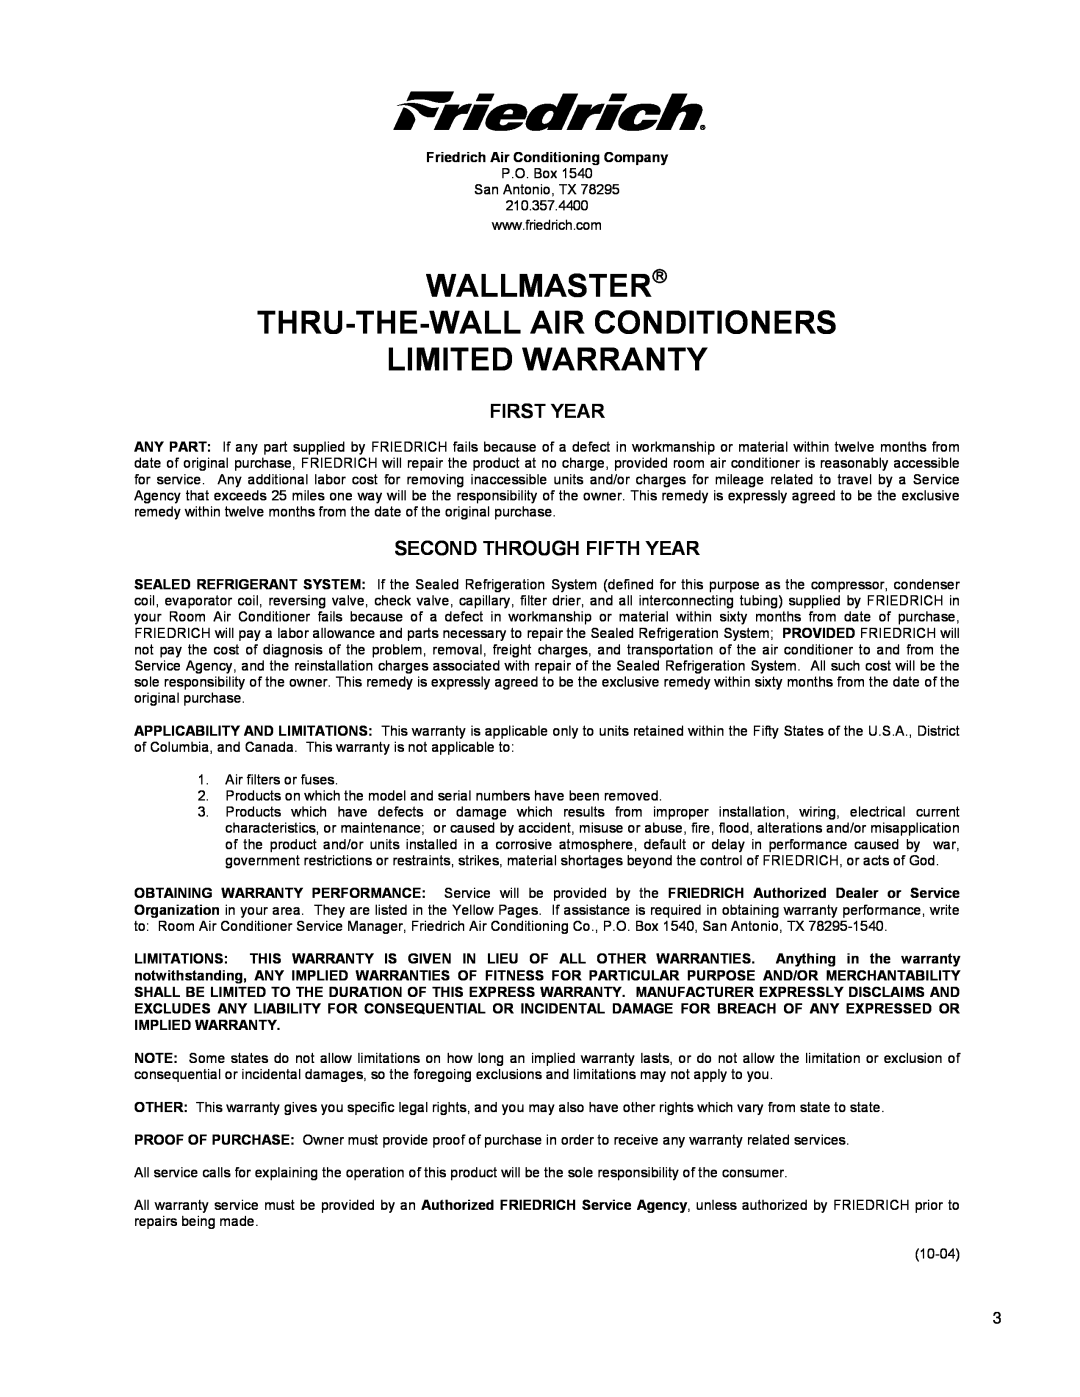 Friedrich WE10B33A-B Wallmaster≤ Thru-The-Wallair Conditioners, Limited Warranty, First Year, Second Through Fifth Year 